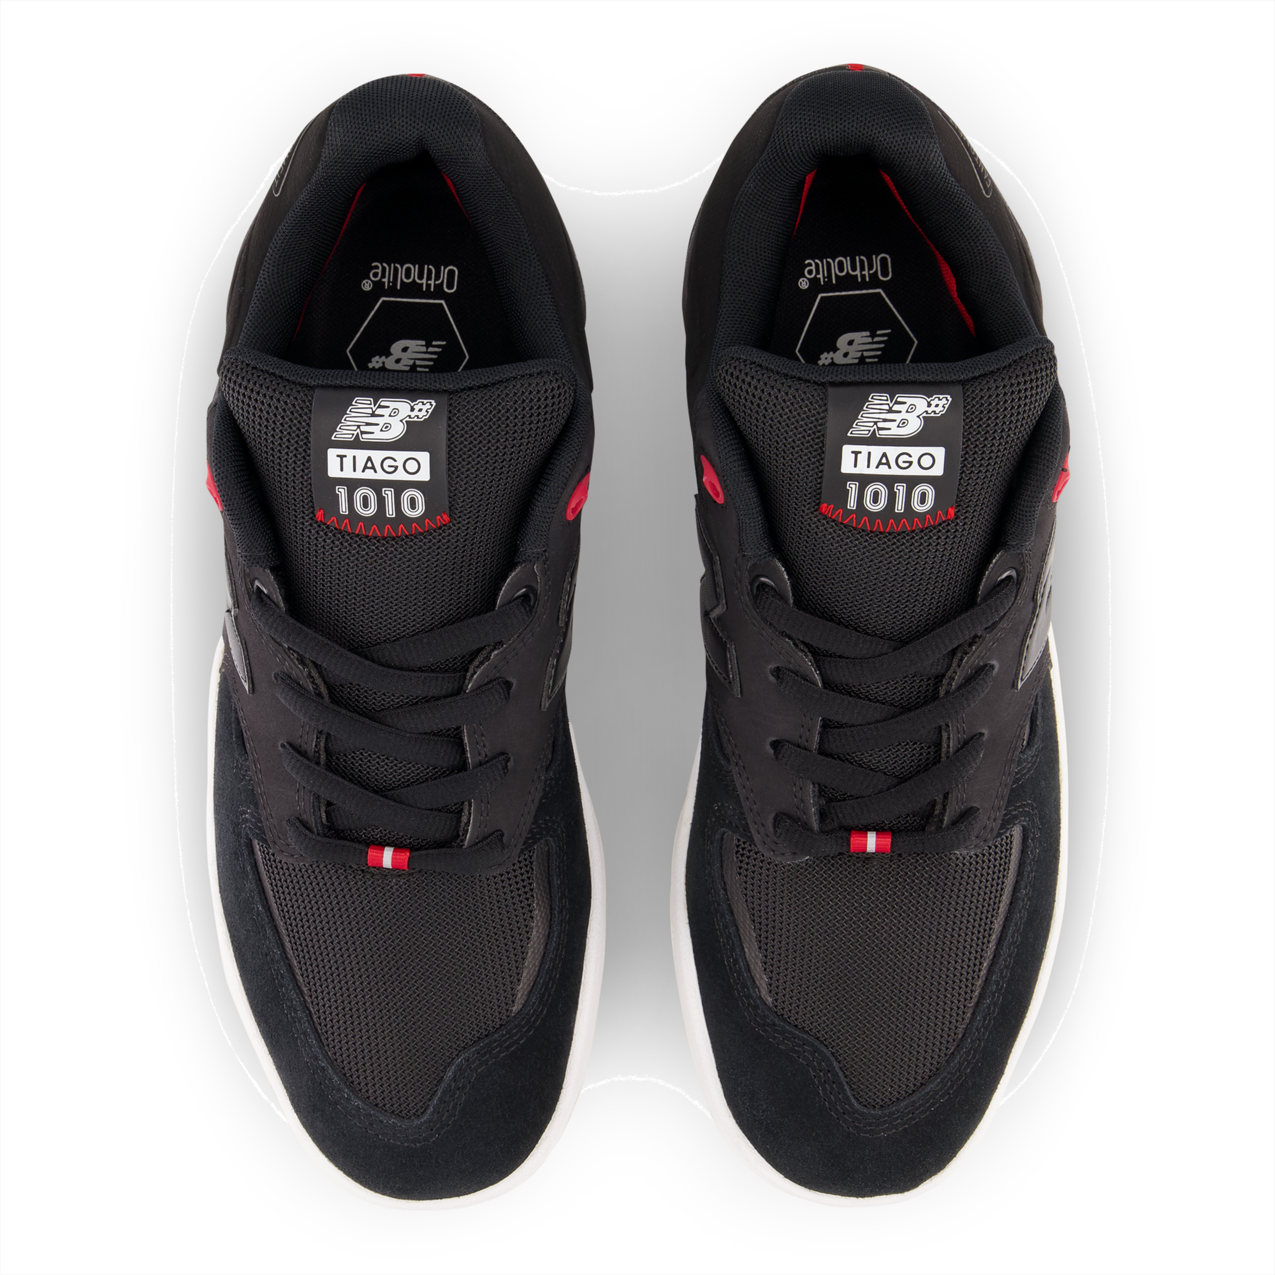 New Balance Numeric Men's Tiago Lemos 1010 Black Black Shoes